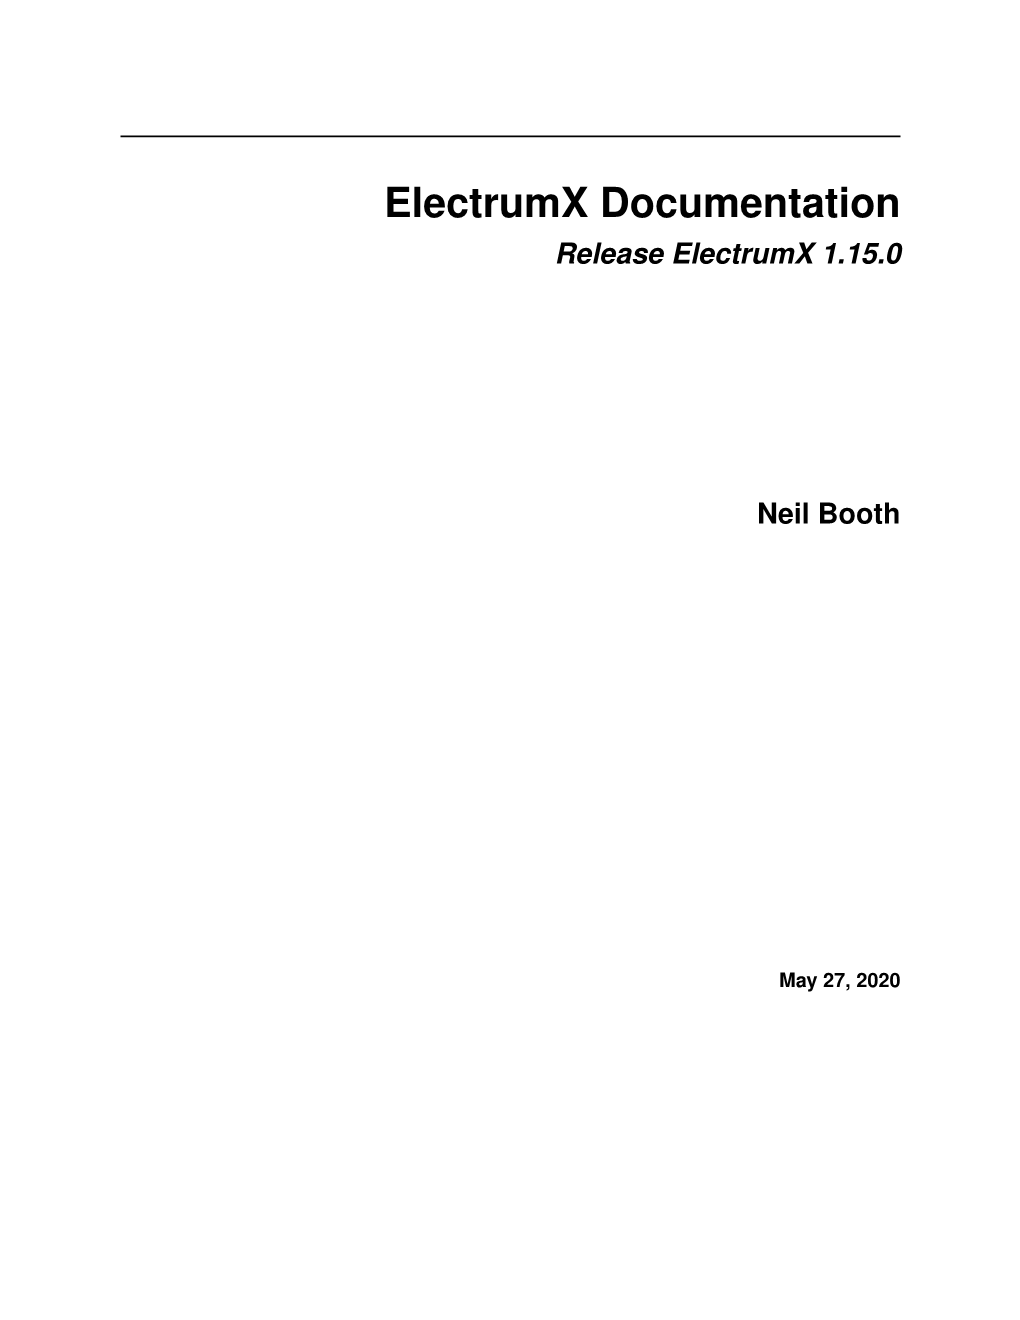 Electrumx Documentation Release Electrumx 1.15.0